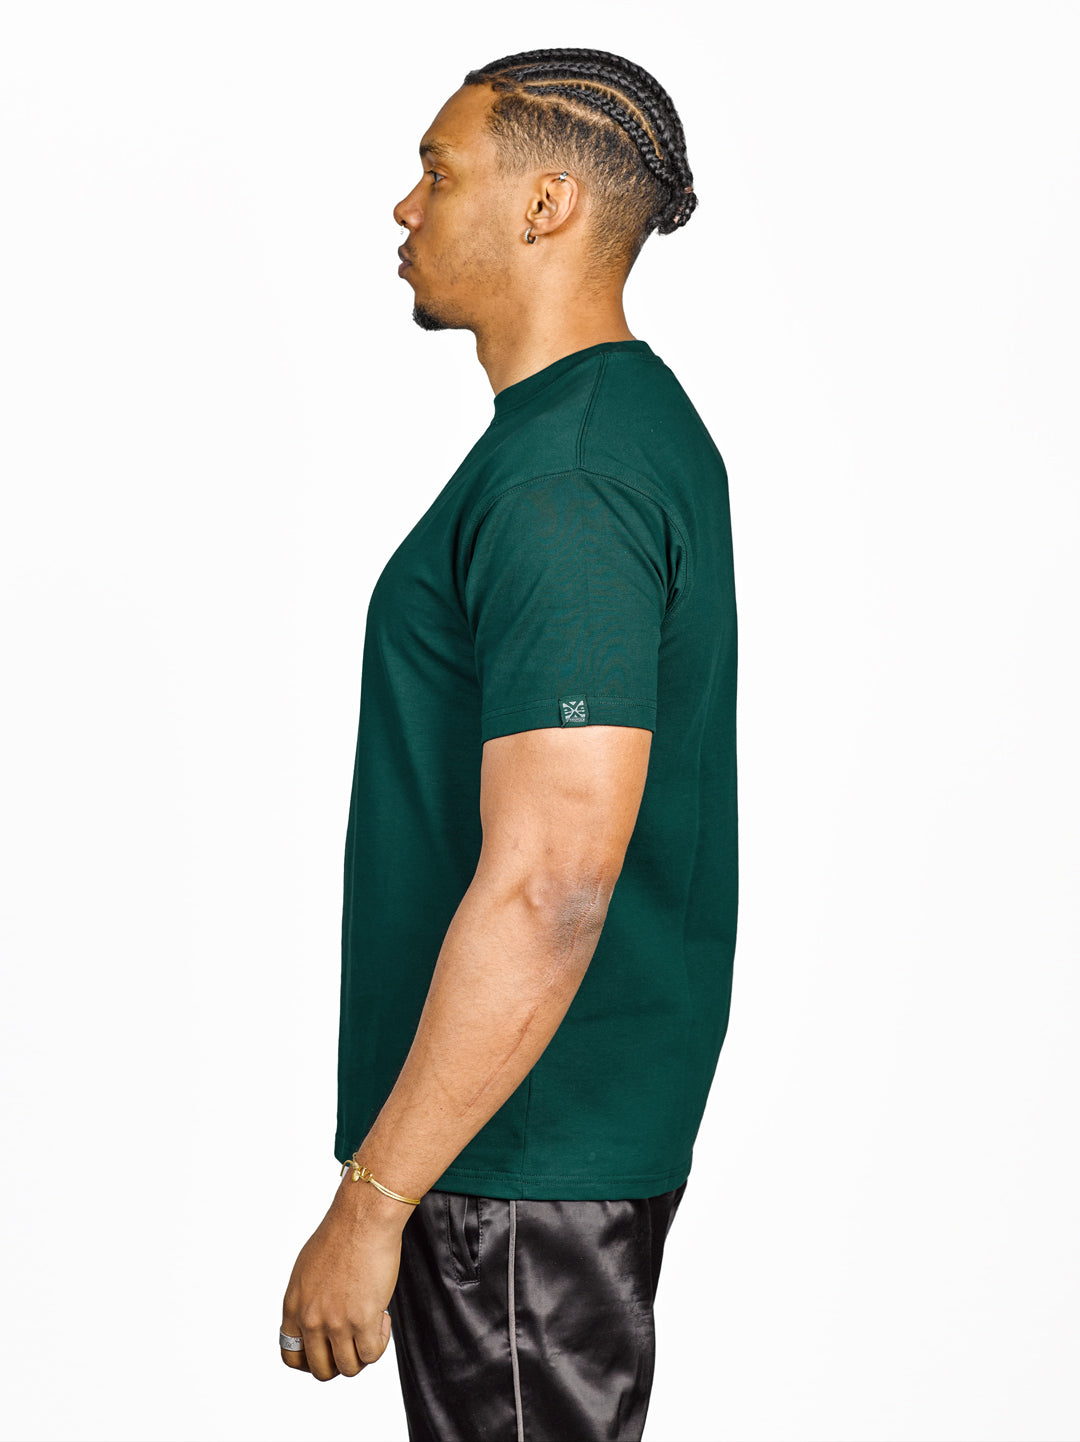 Exetees Plain Regular Round Neck T-Shirt - Emerald Green